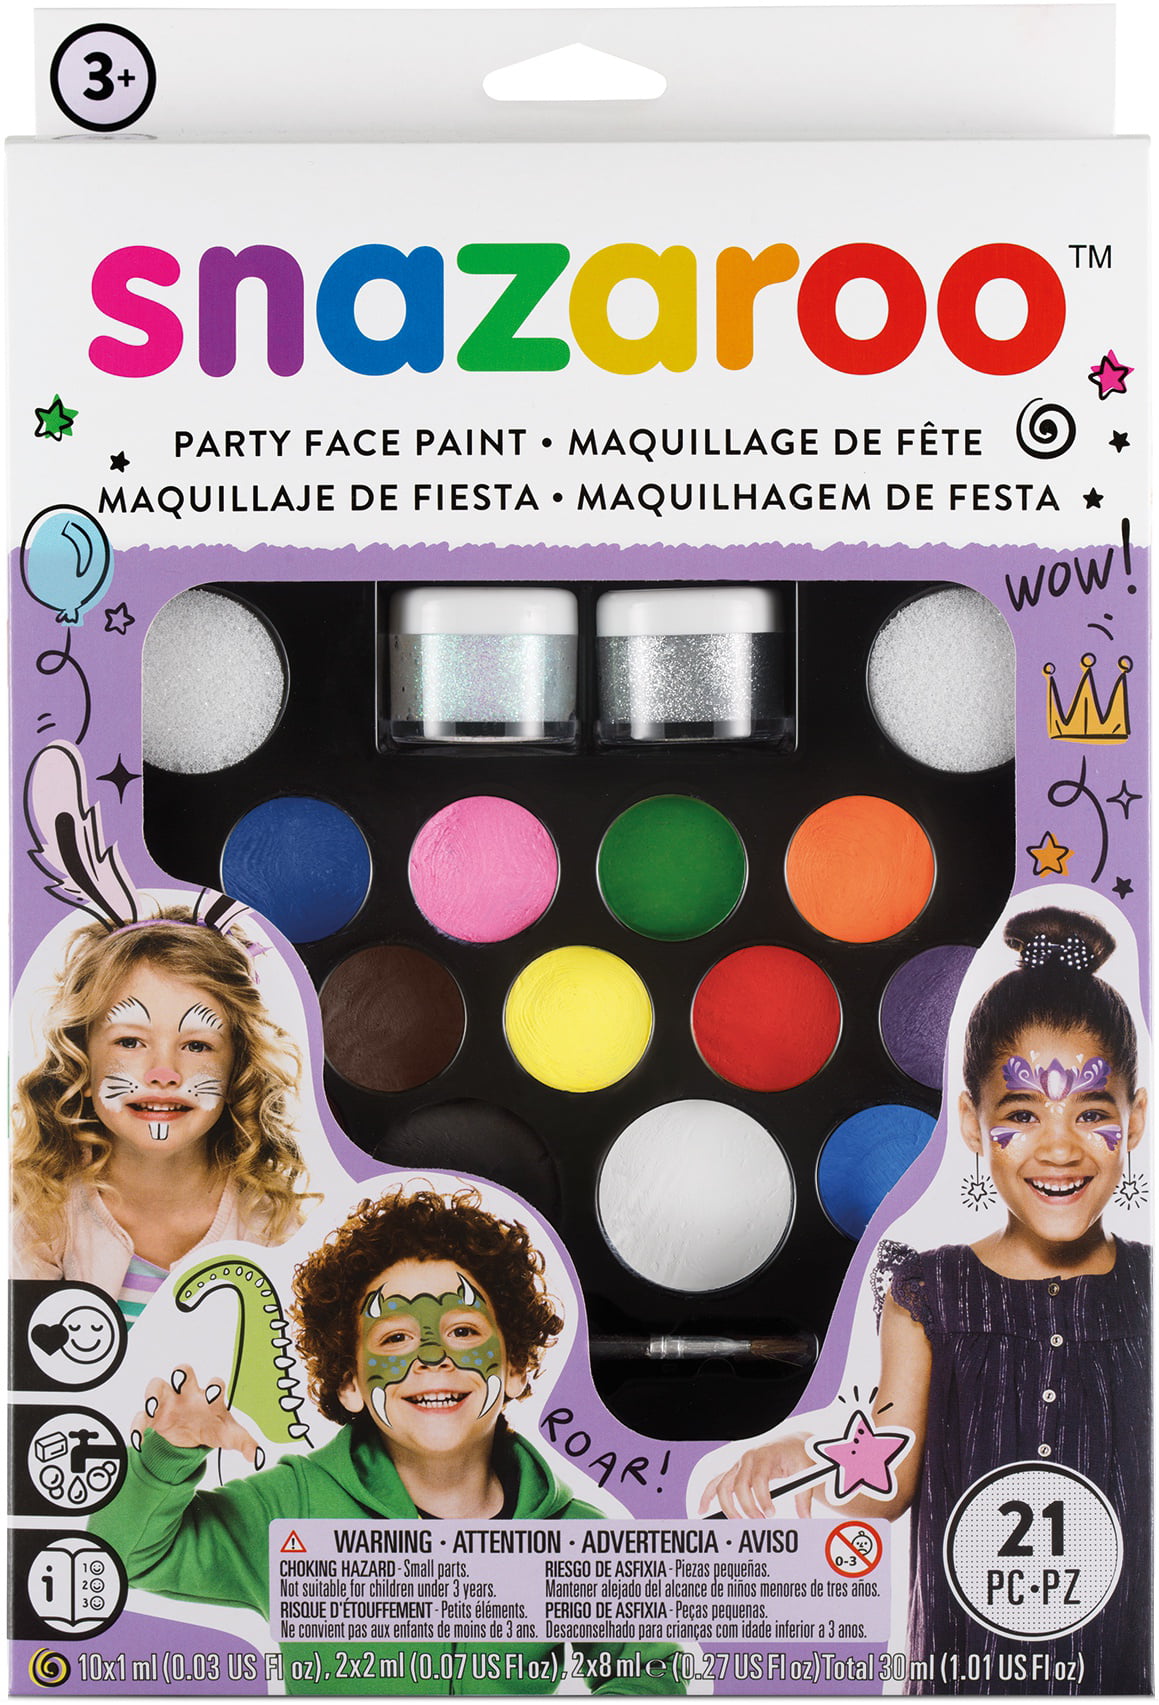 Snazaroo Face Painting Starter Kit • Find prices »